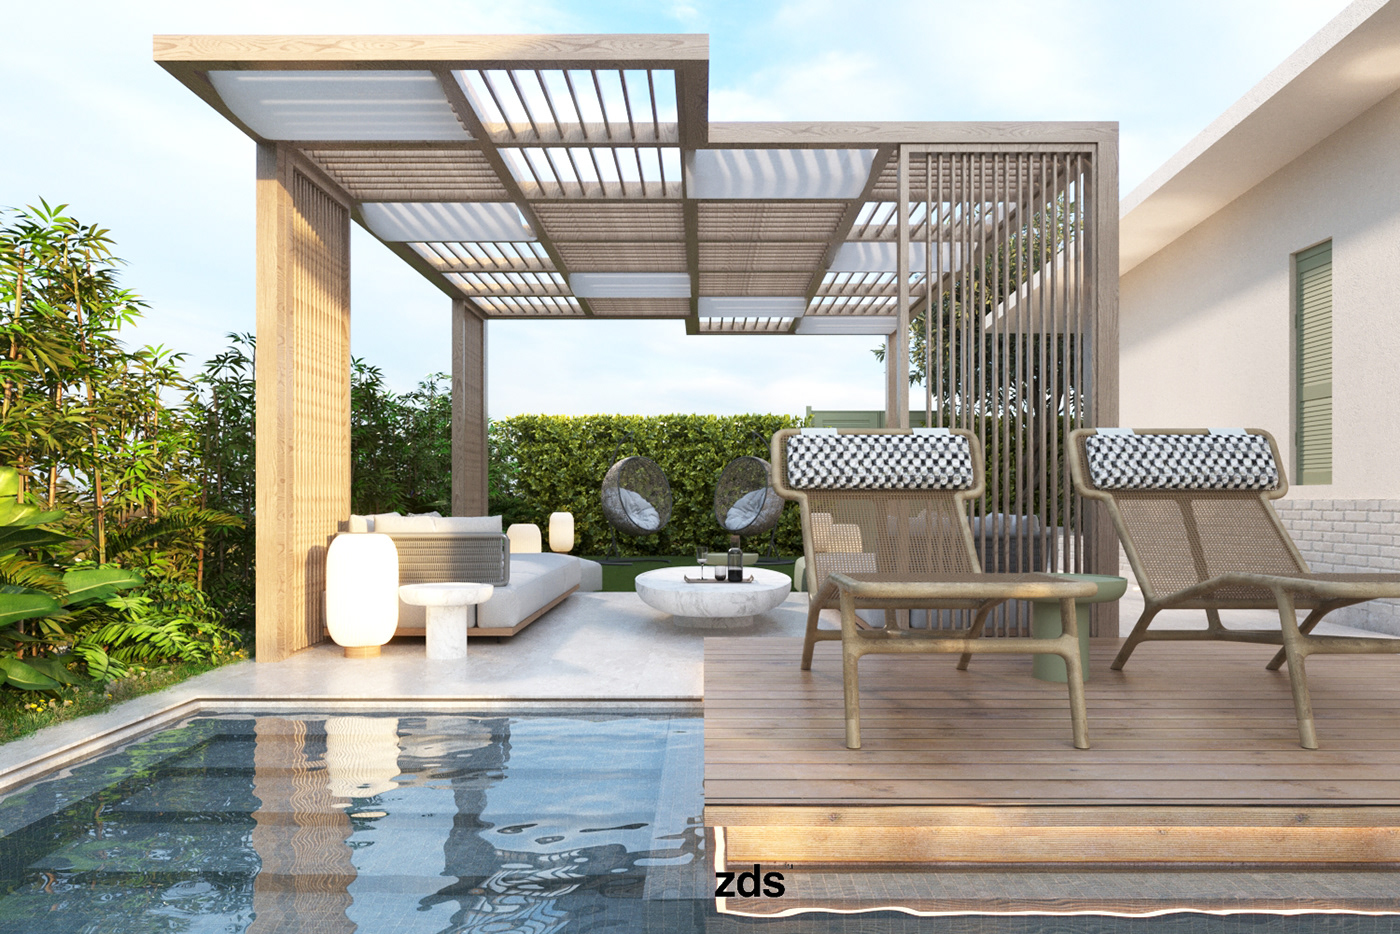 Outdoor Nature summerhouse interior design  architecture Render visualization 3ds max corona archviz